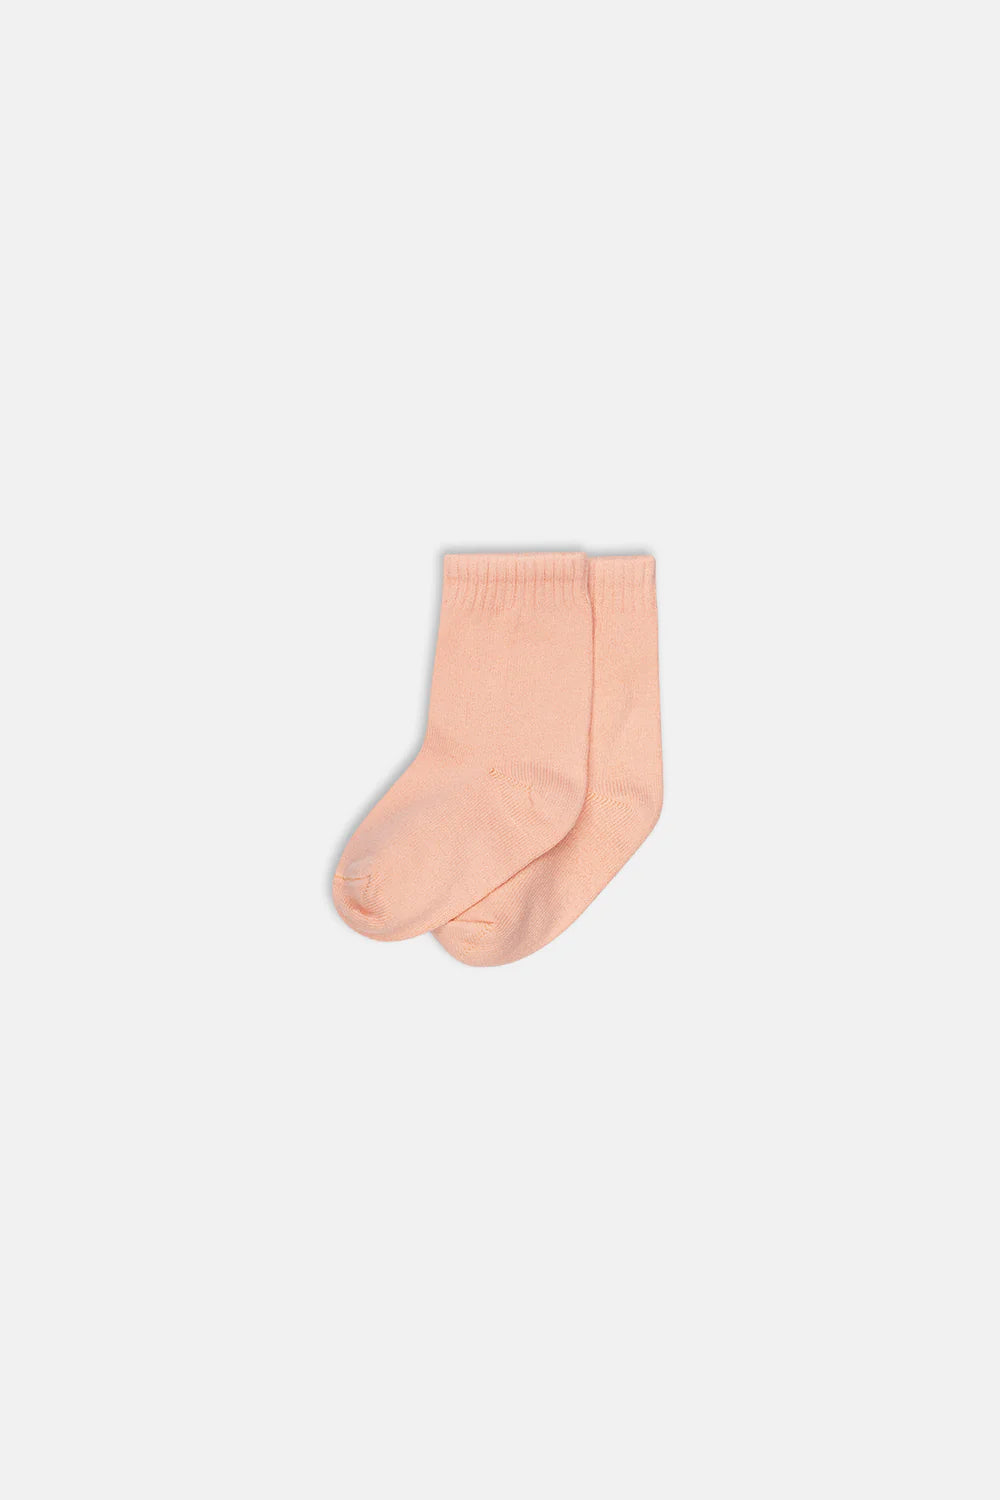 Socks Baby Peach - ملابس